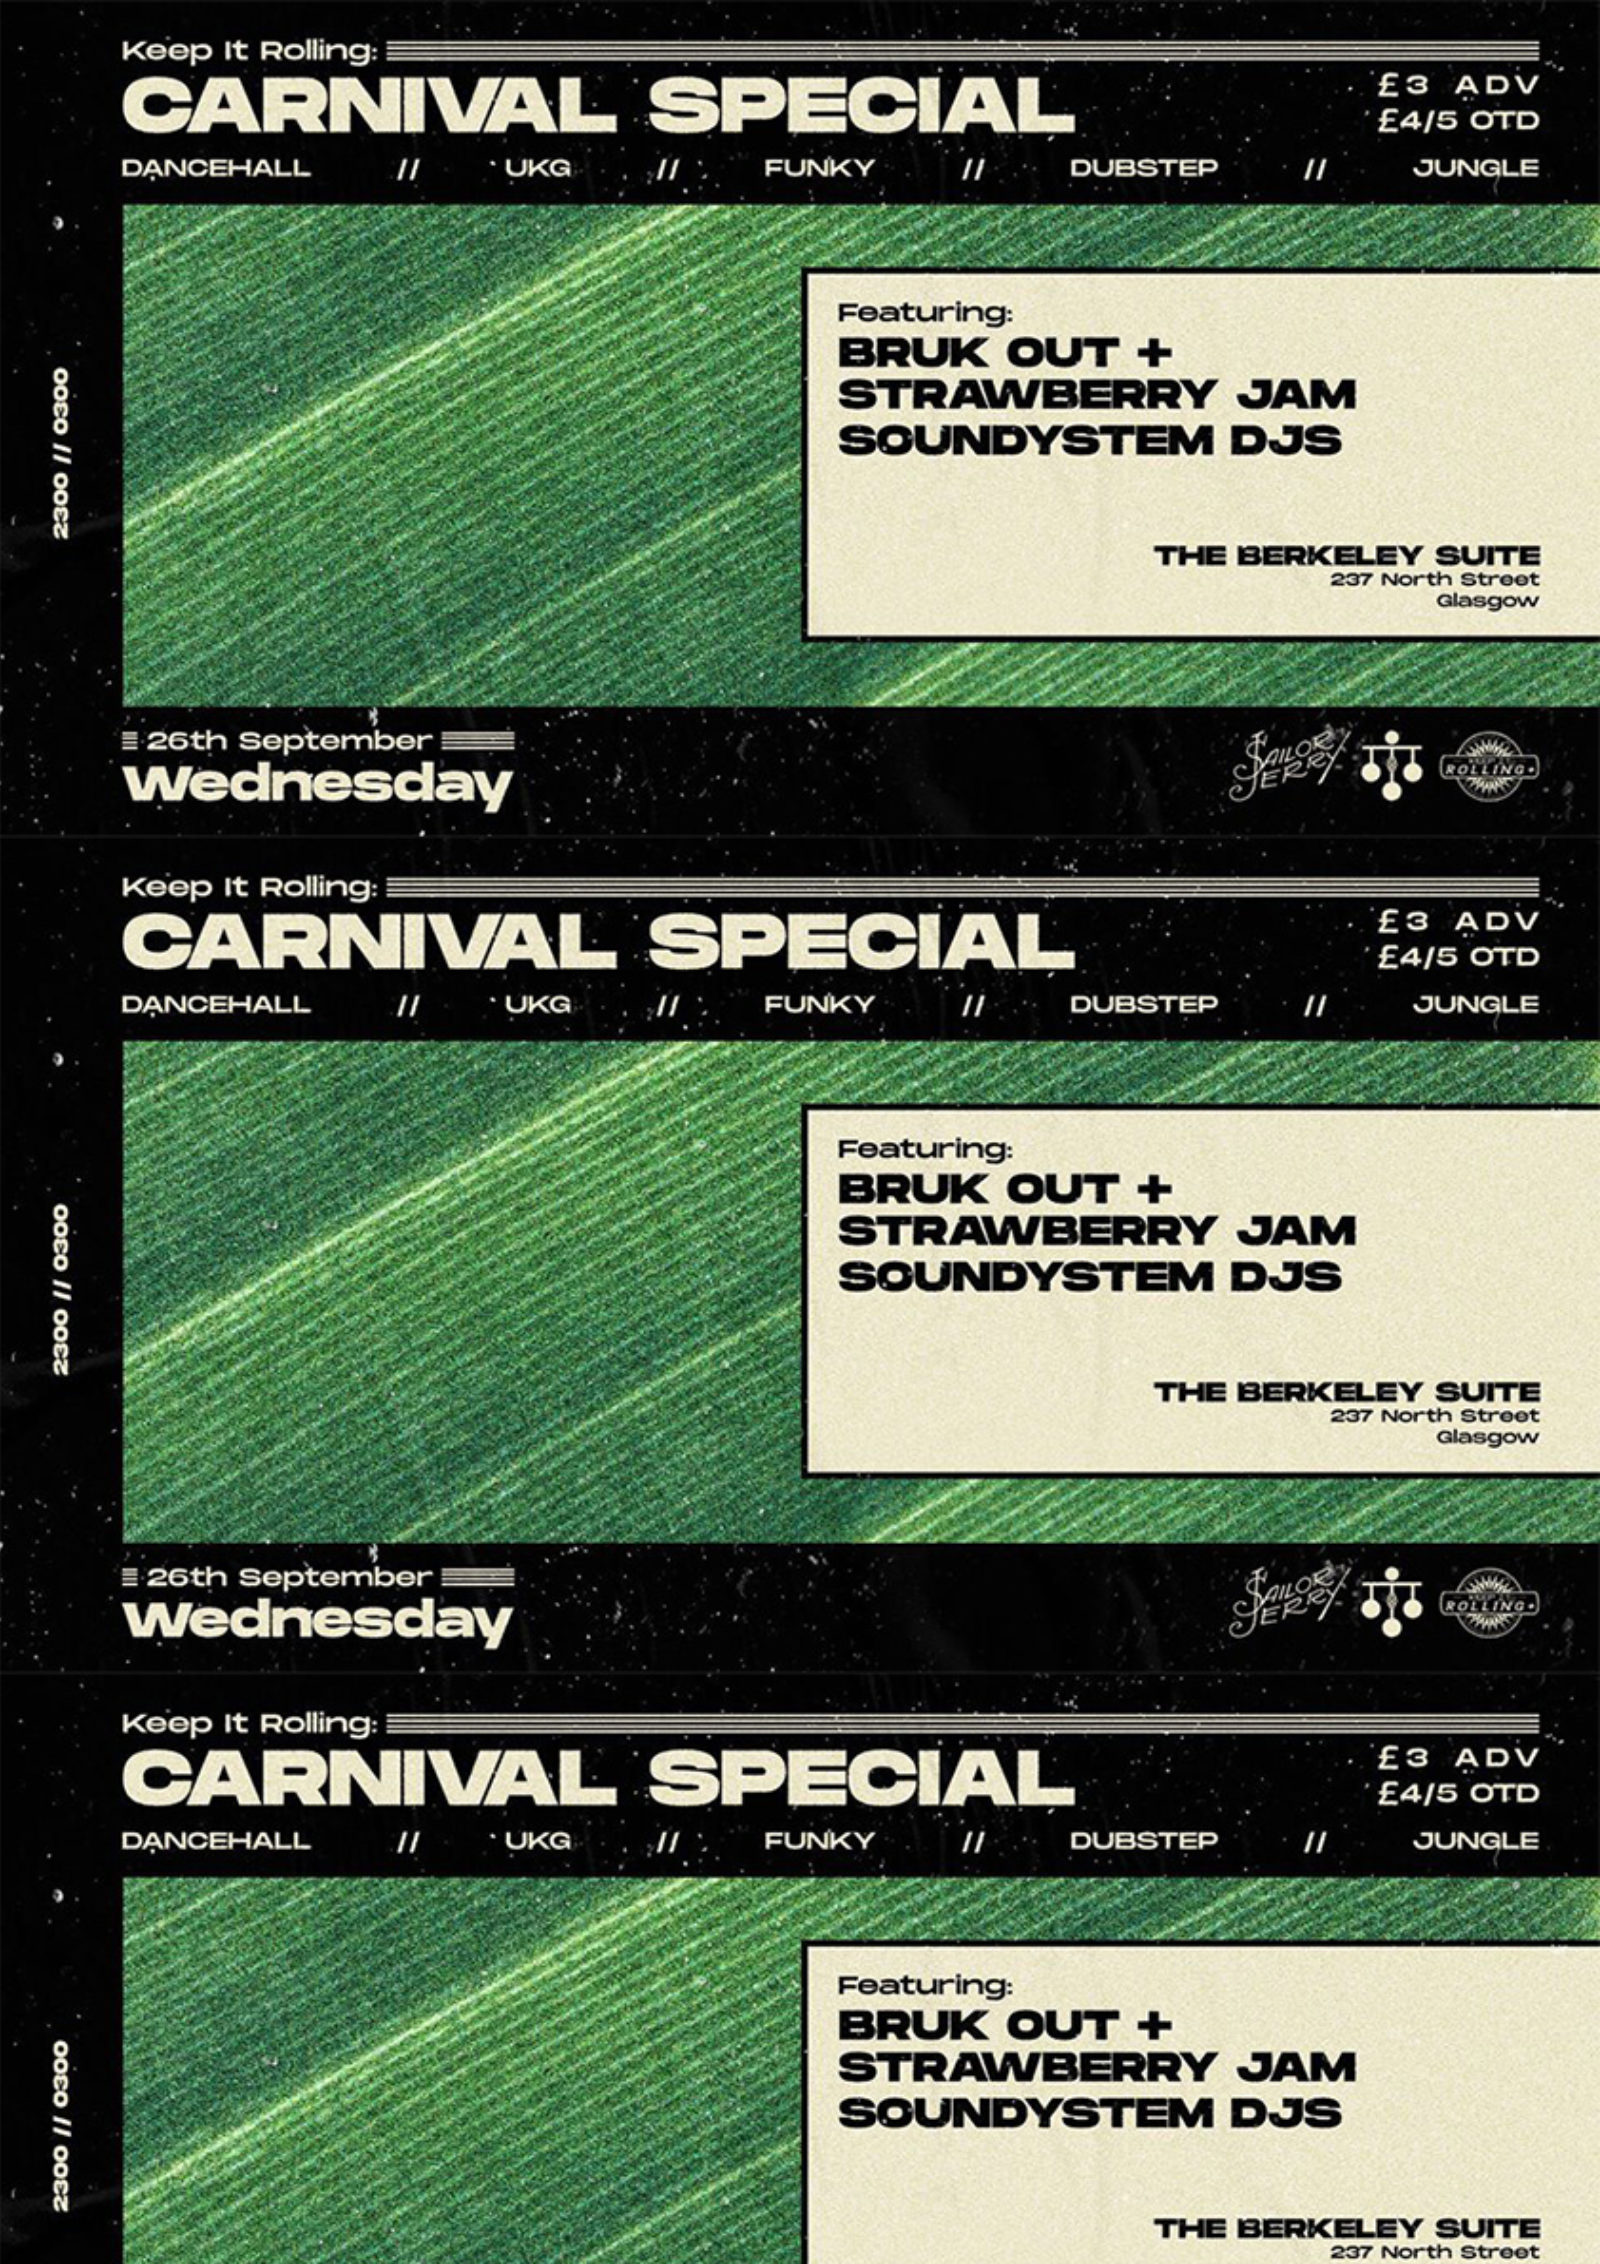 Keep It Rollin - Carnival Special